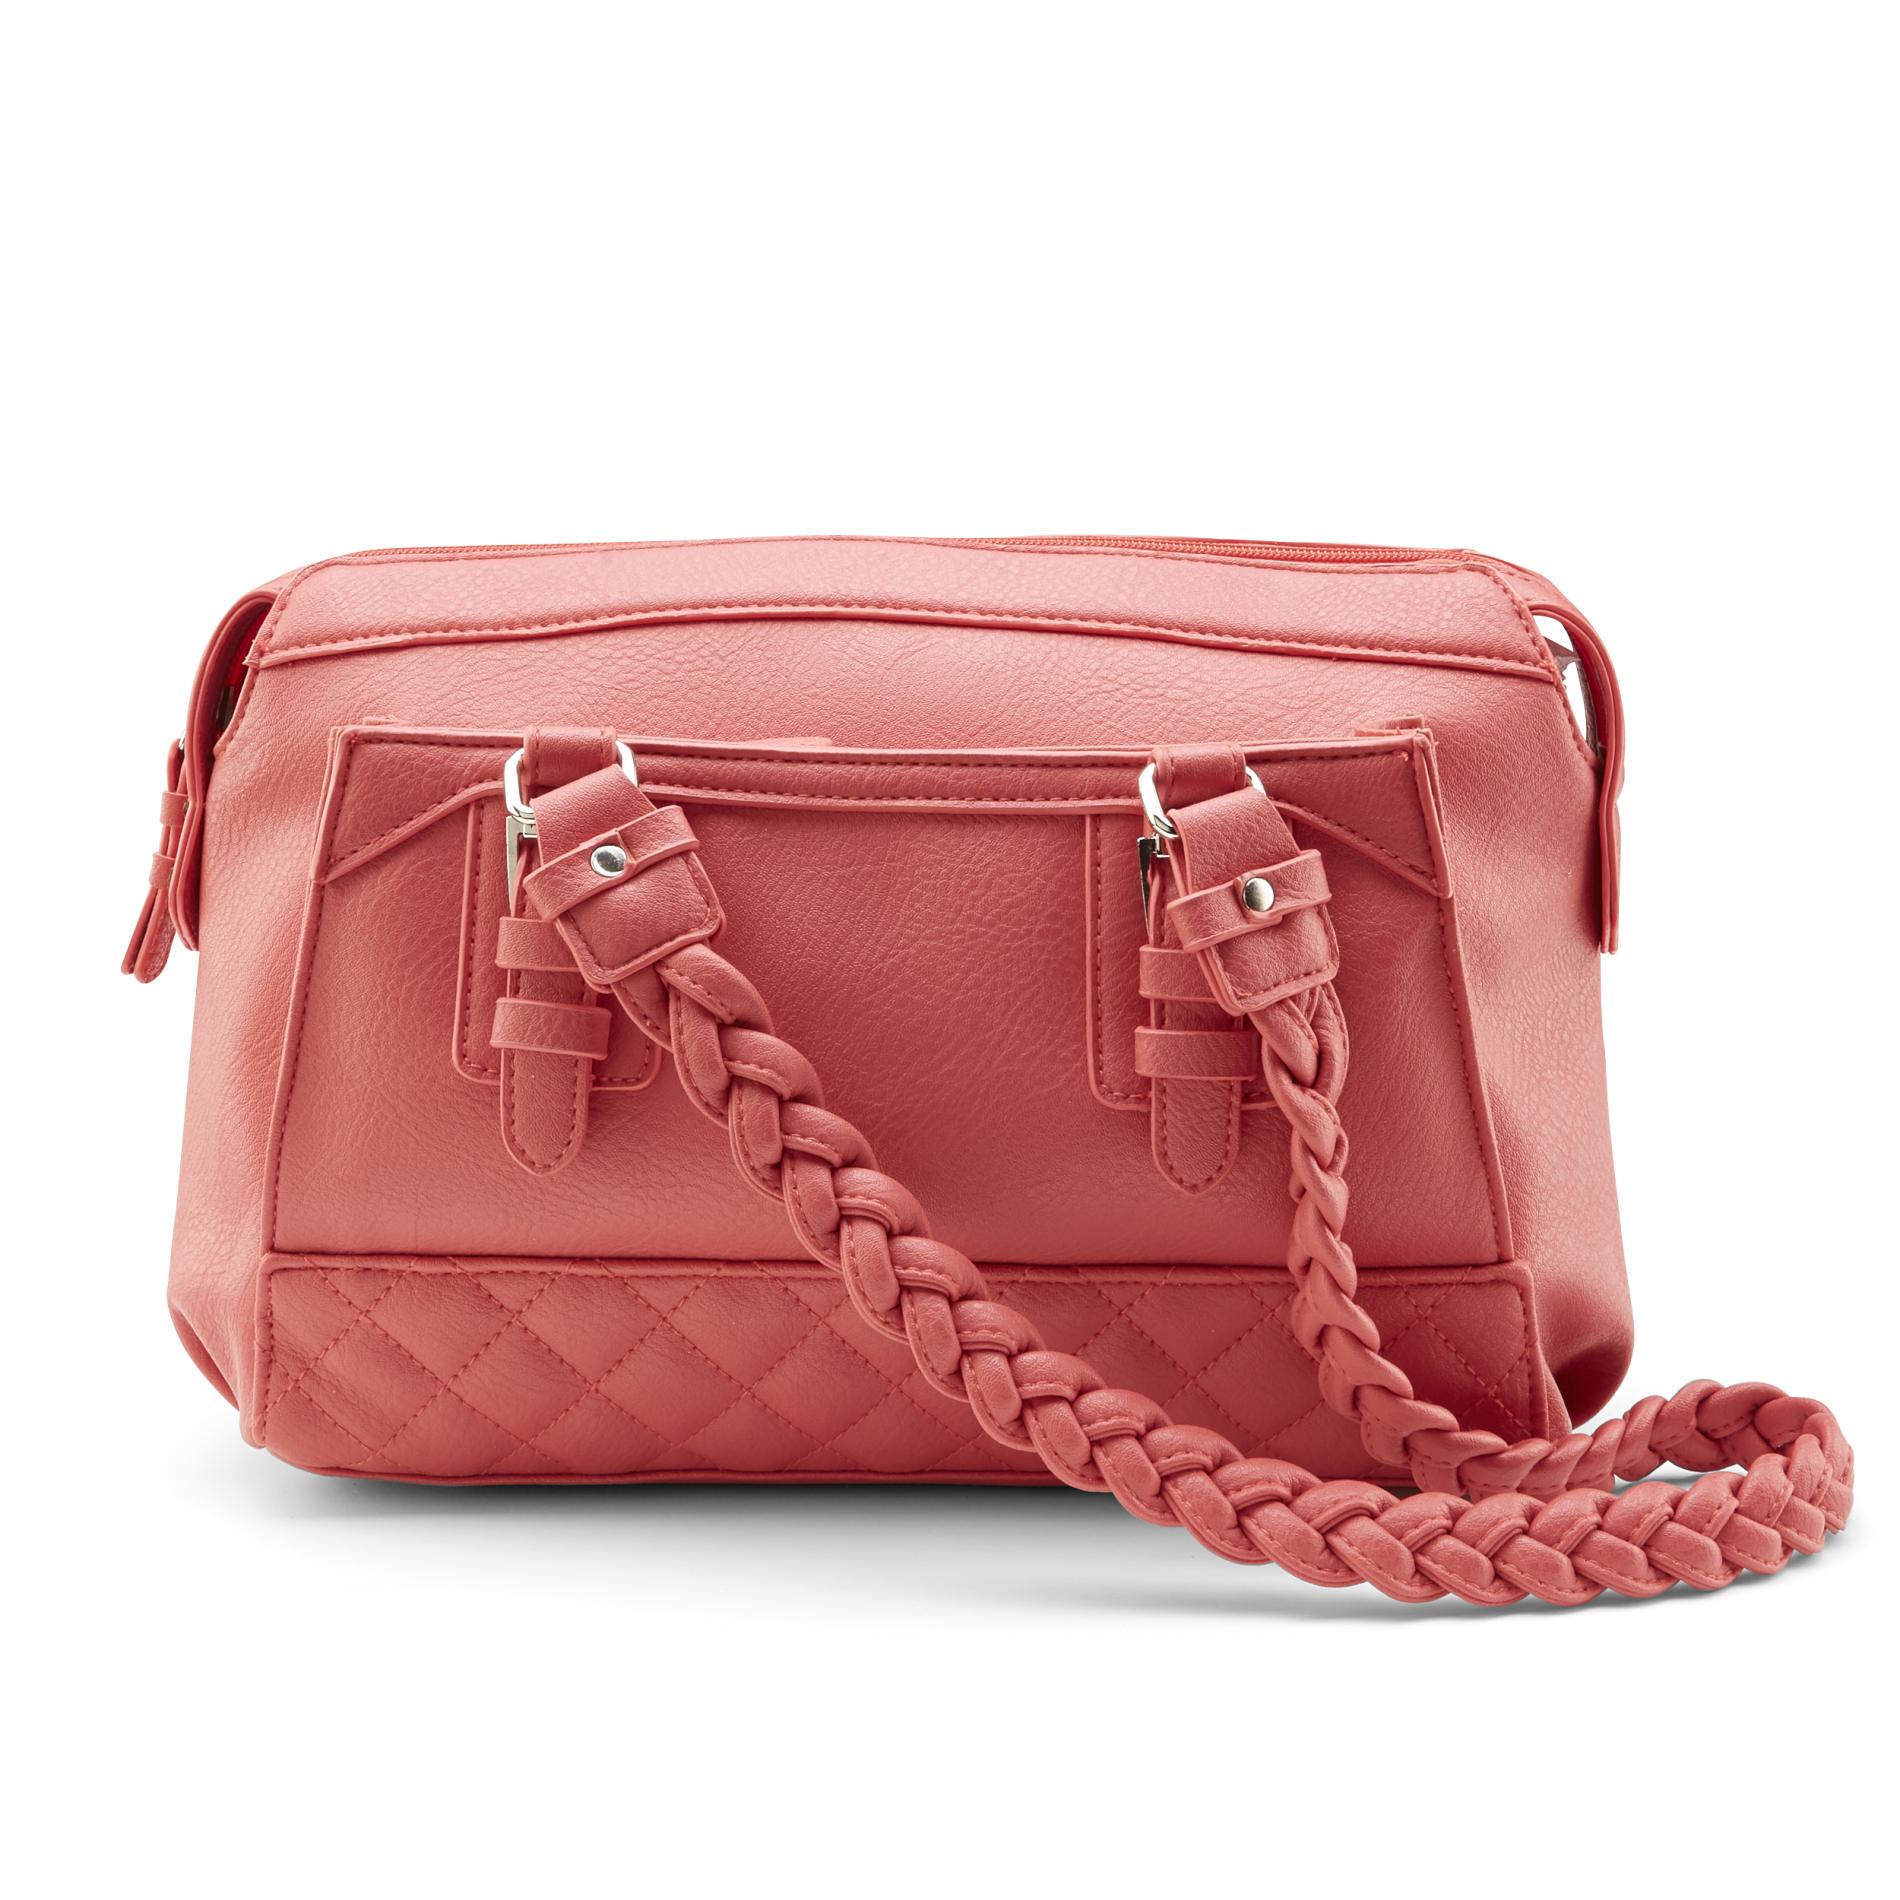 Rosetti Women's Satchel Handbag